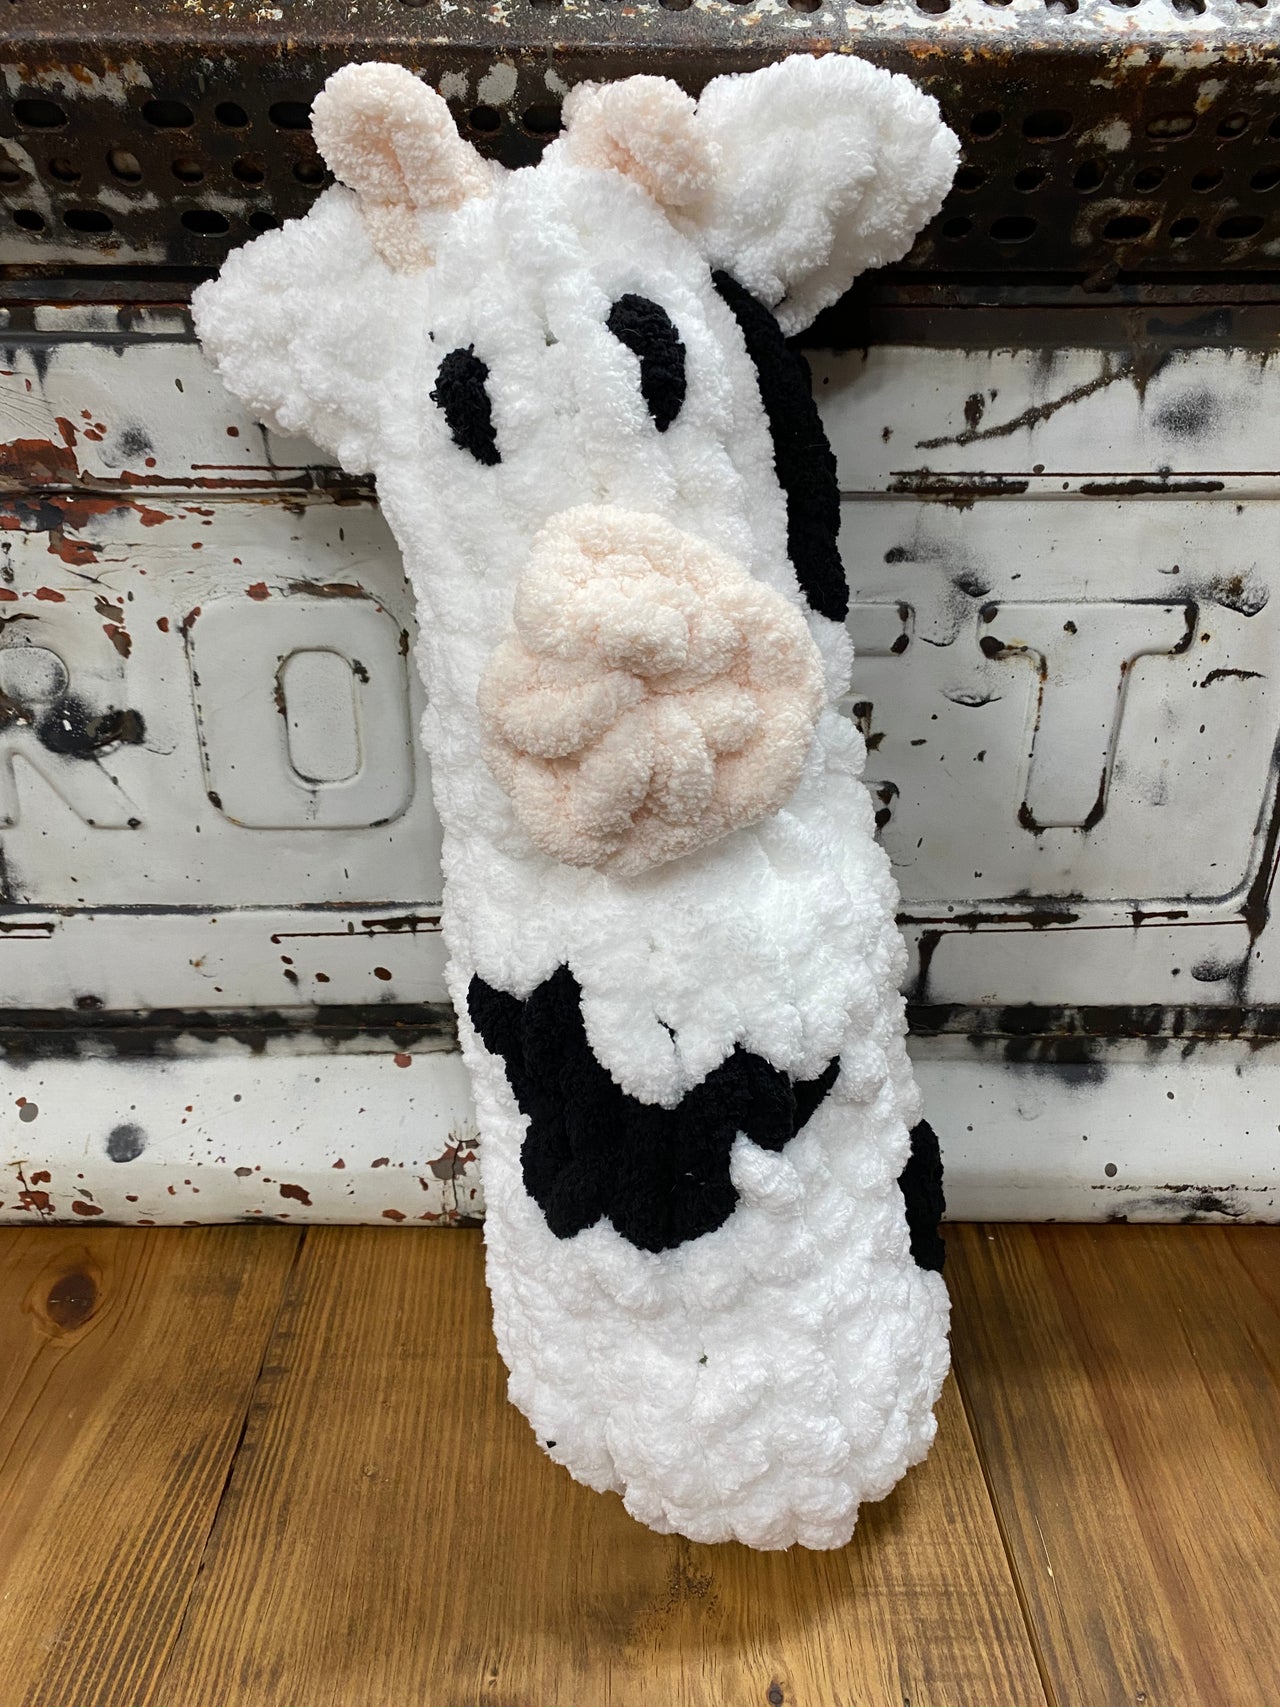 Crocheted Cow Stuffed Animal